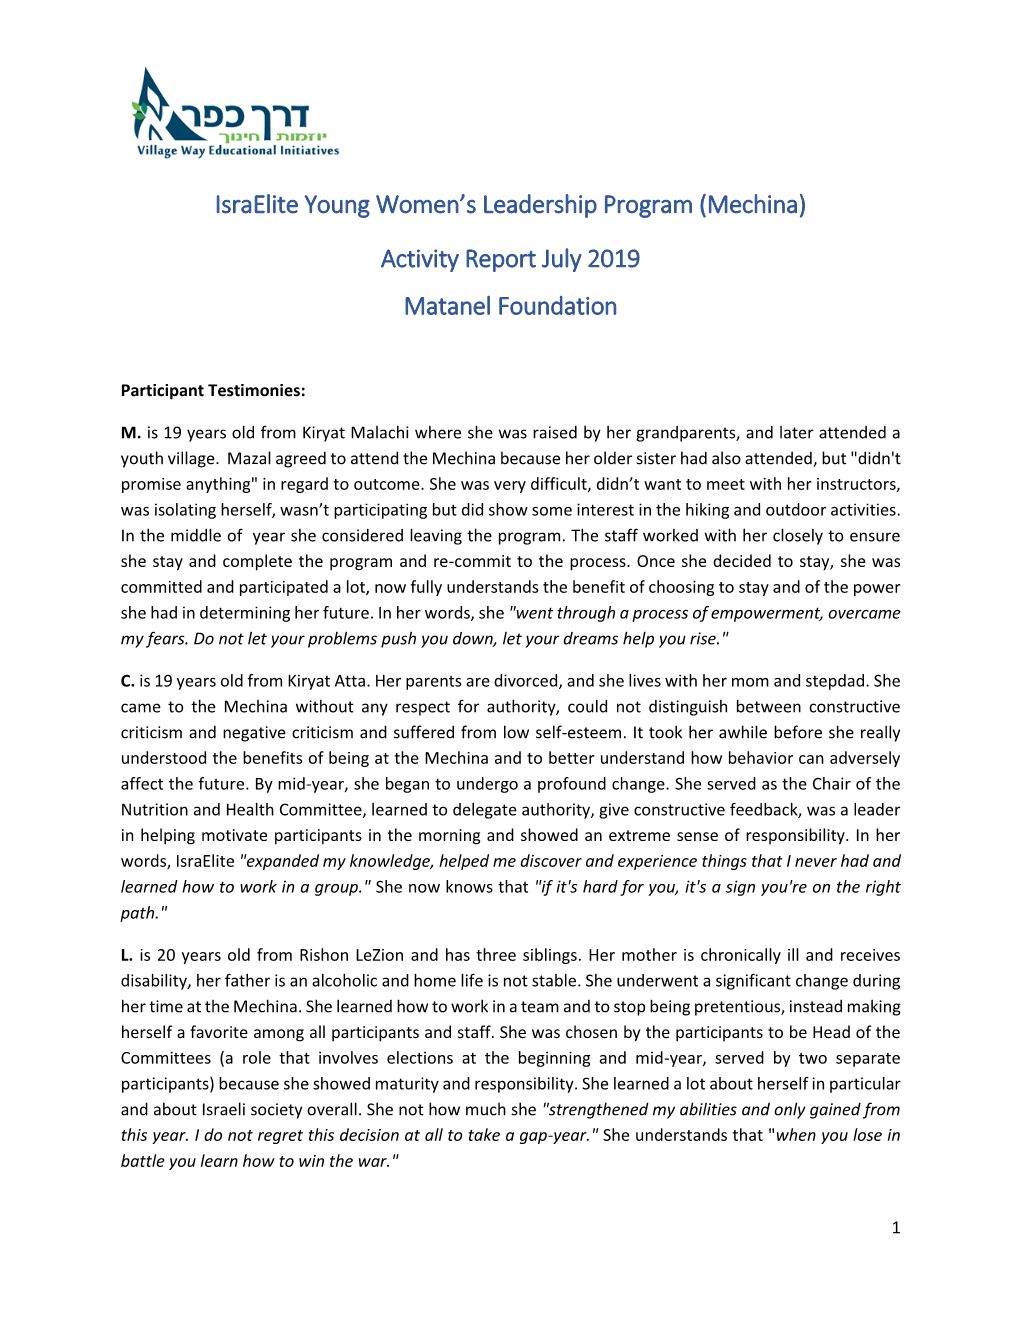 Israelite Young Women's Leadership Program (Mechina) Activity Report